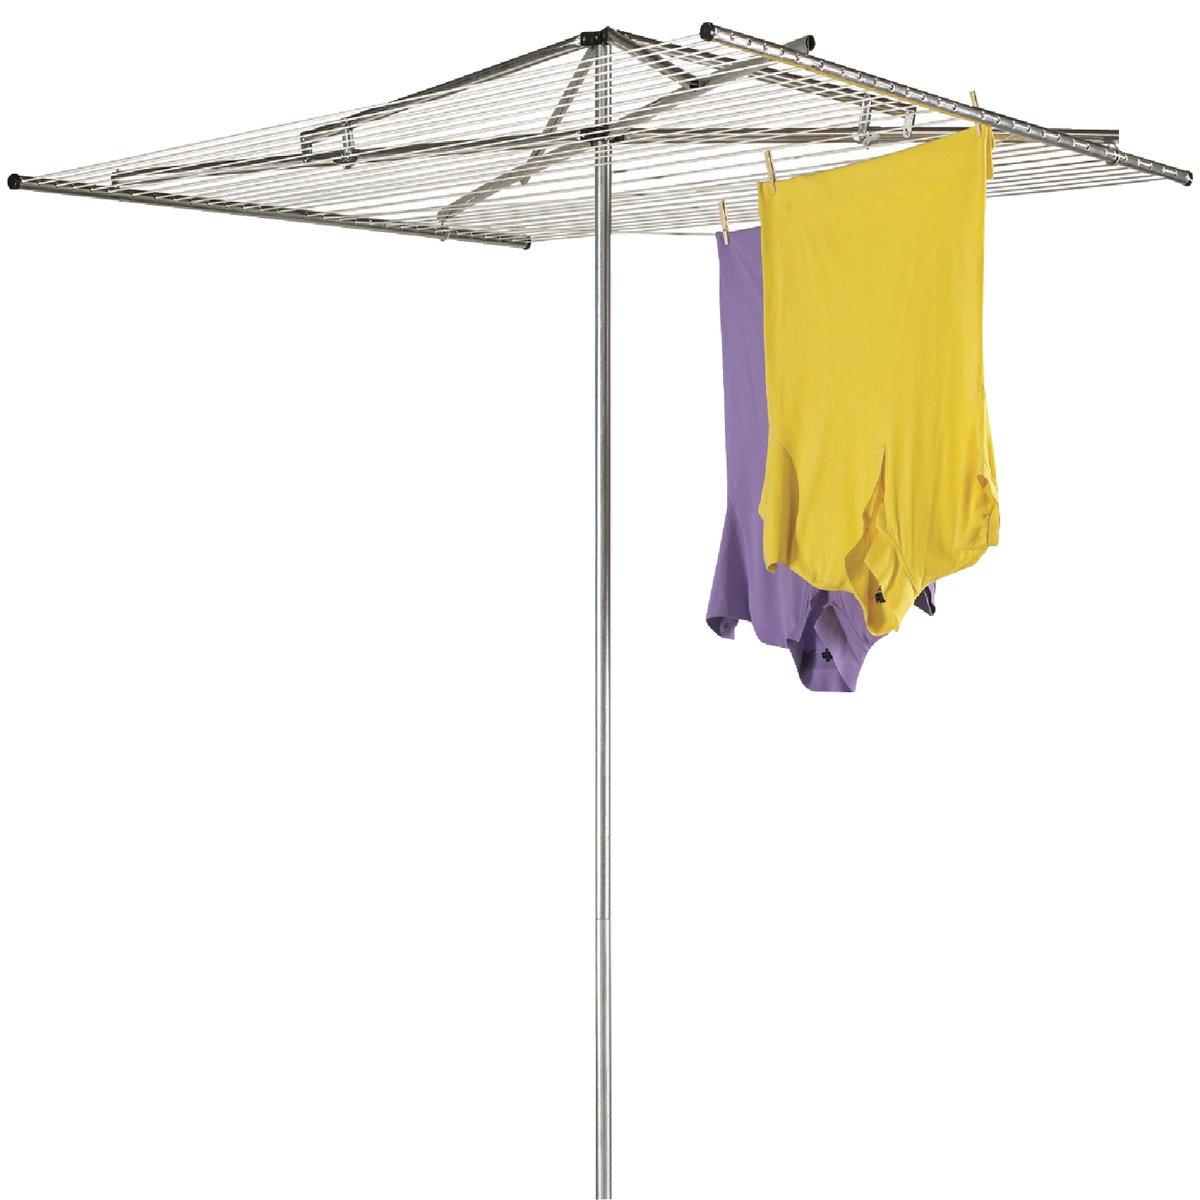 Umbrella Style Clothes Dryer